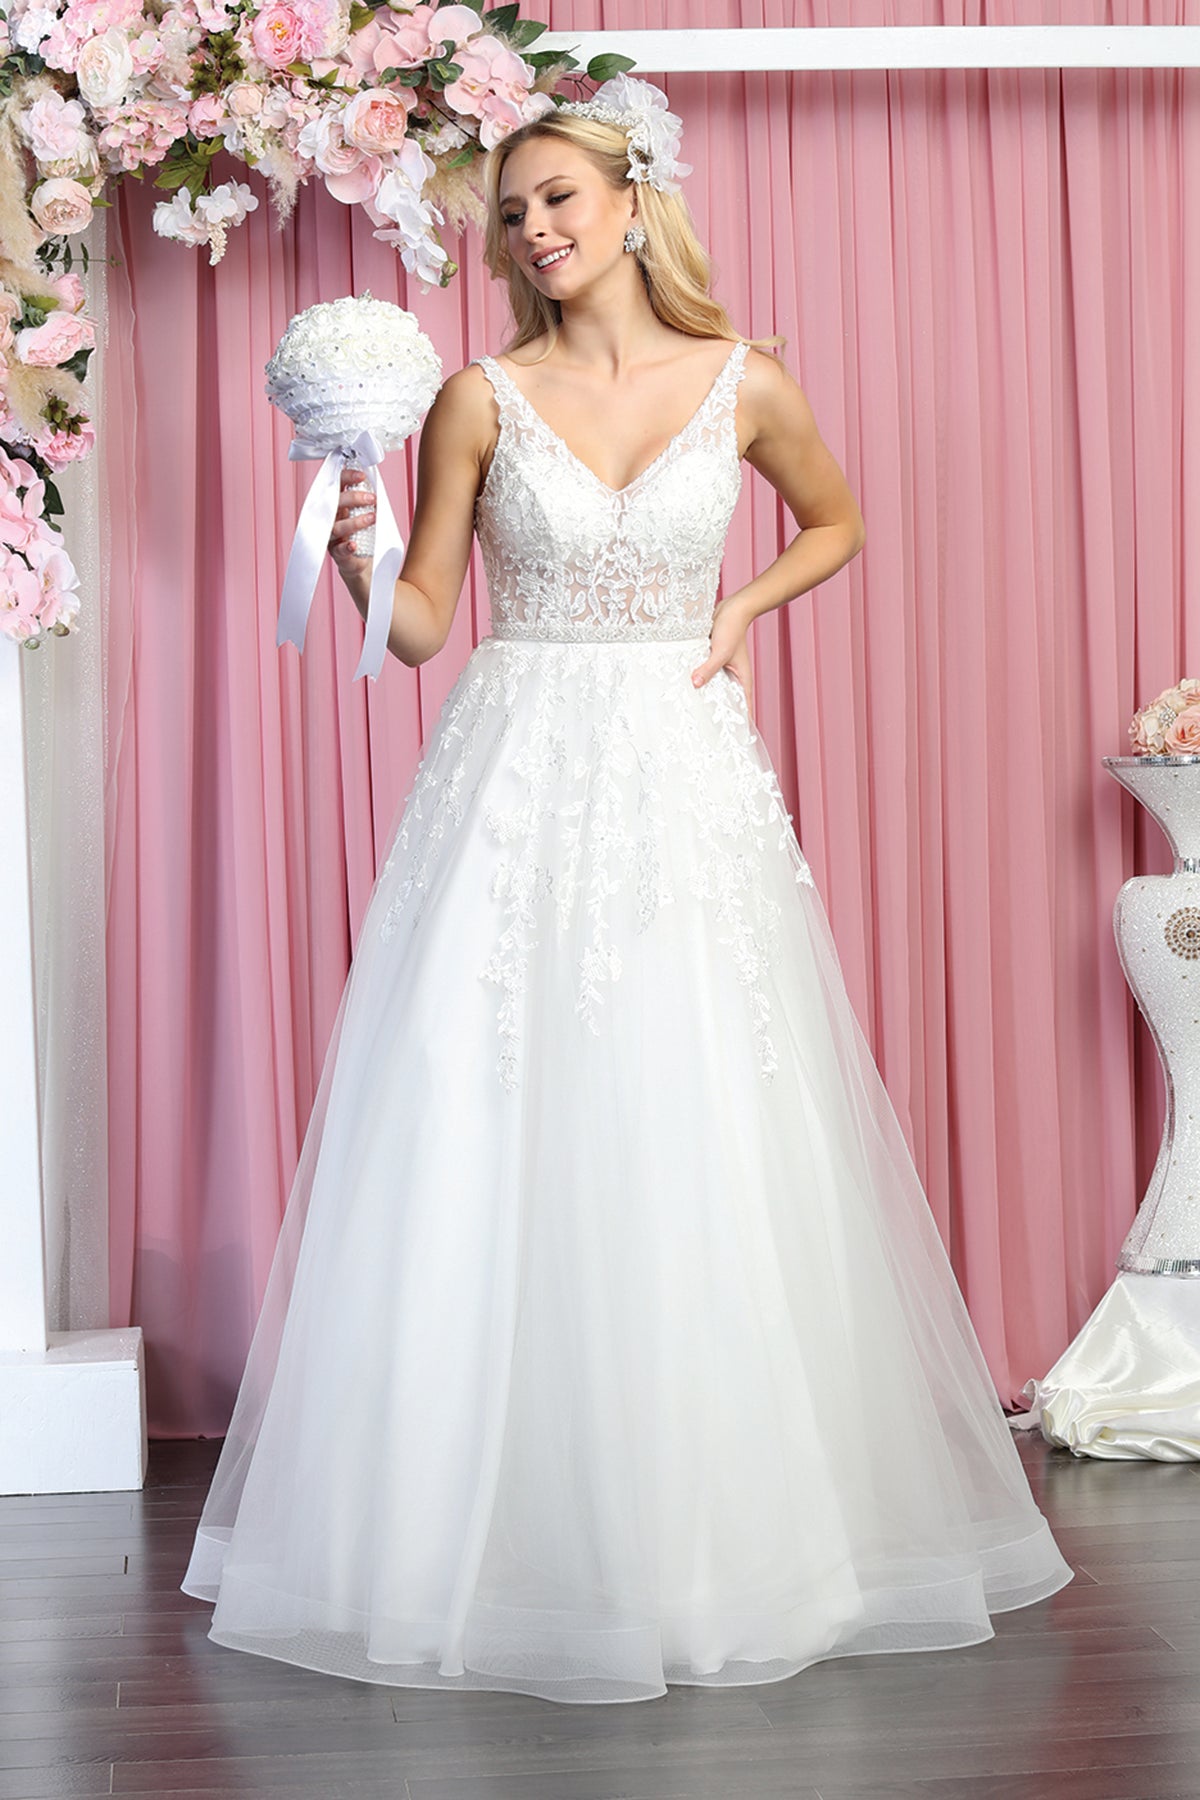 Stunning Bridal Formal Gown - LA7888